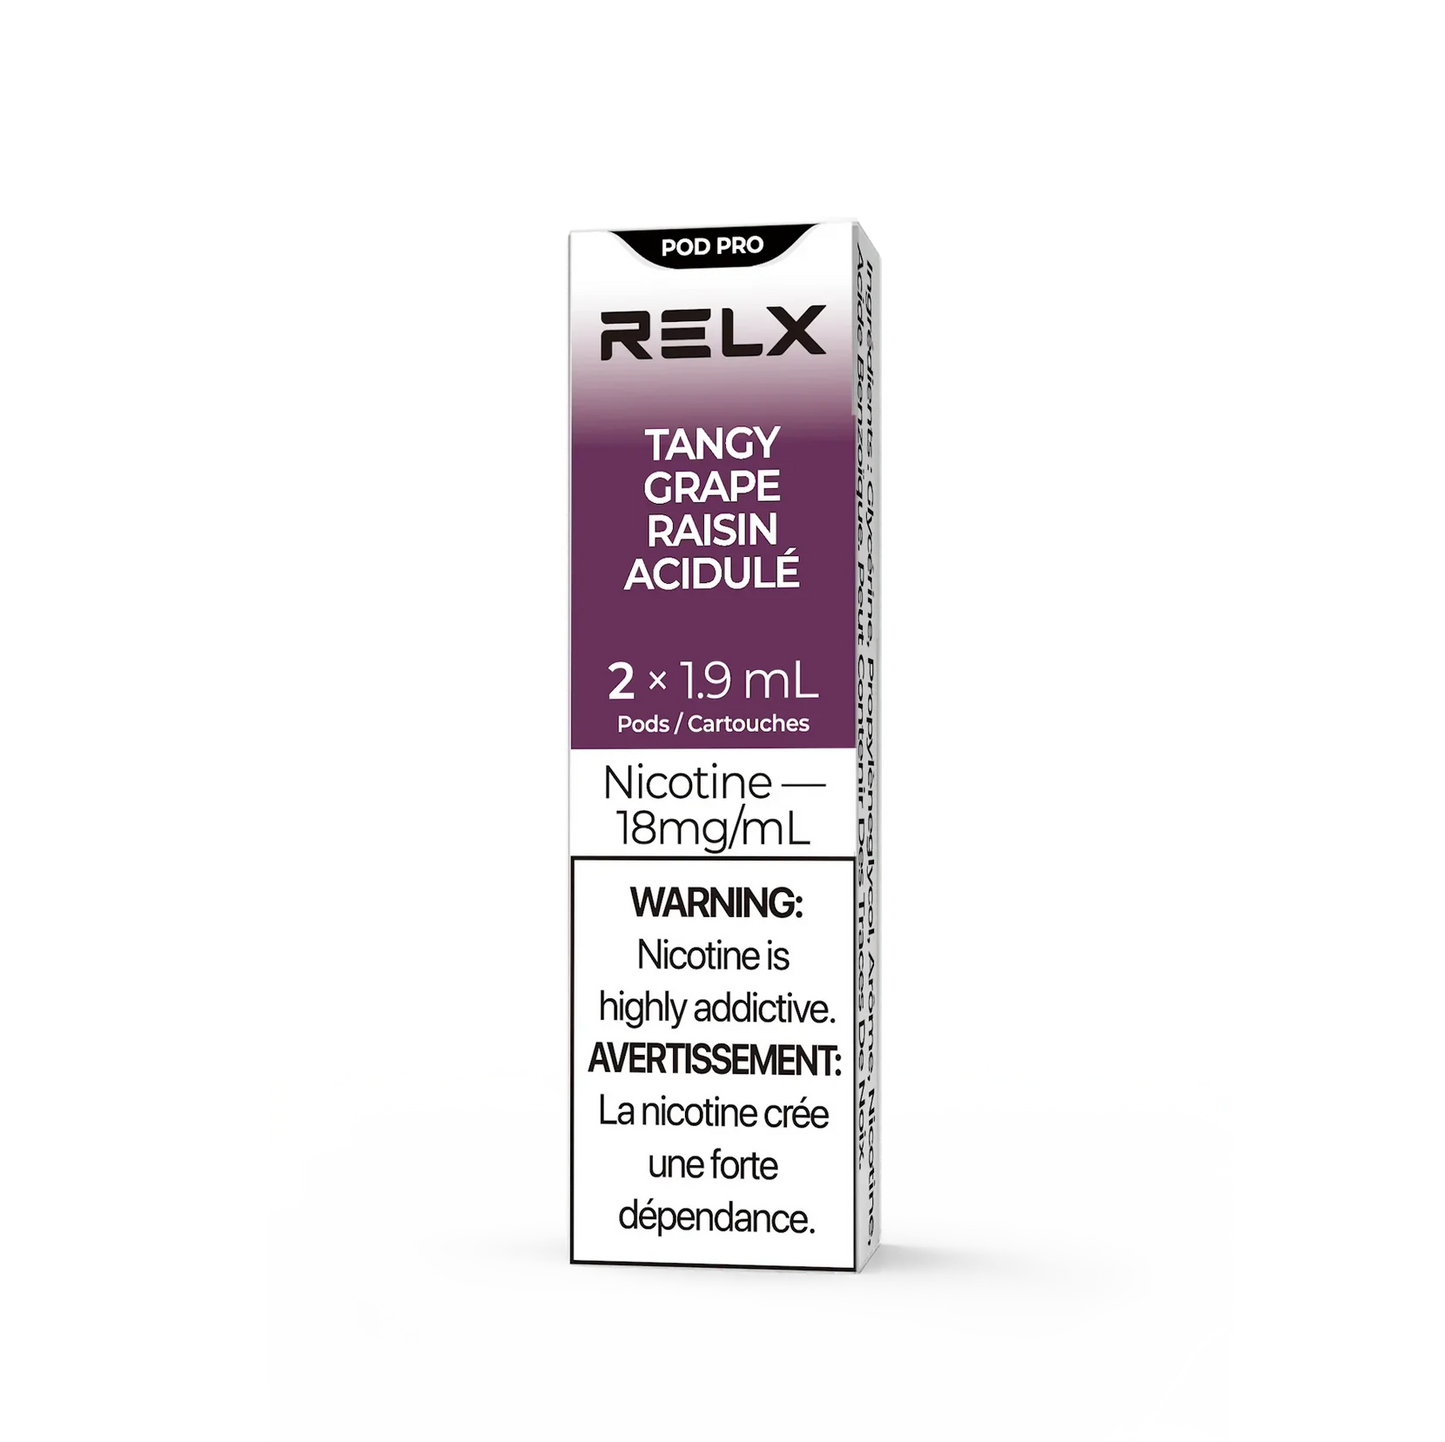 RELX Pod Pro - Tangy Grape